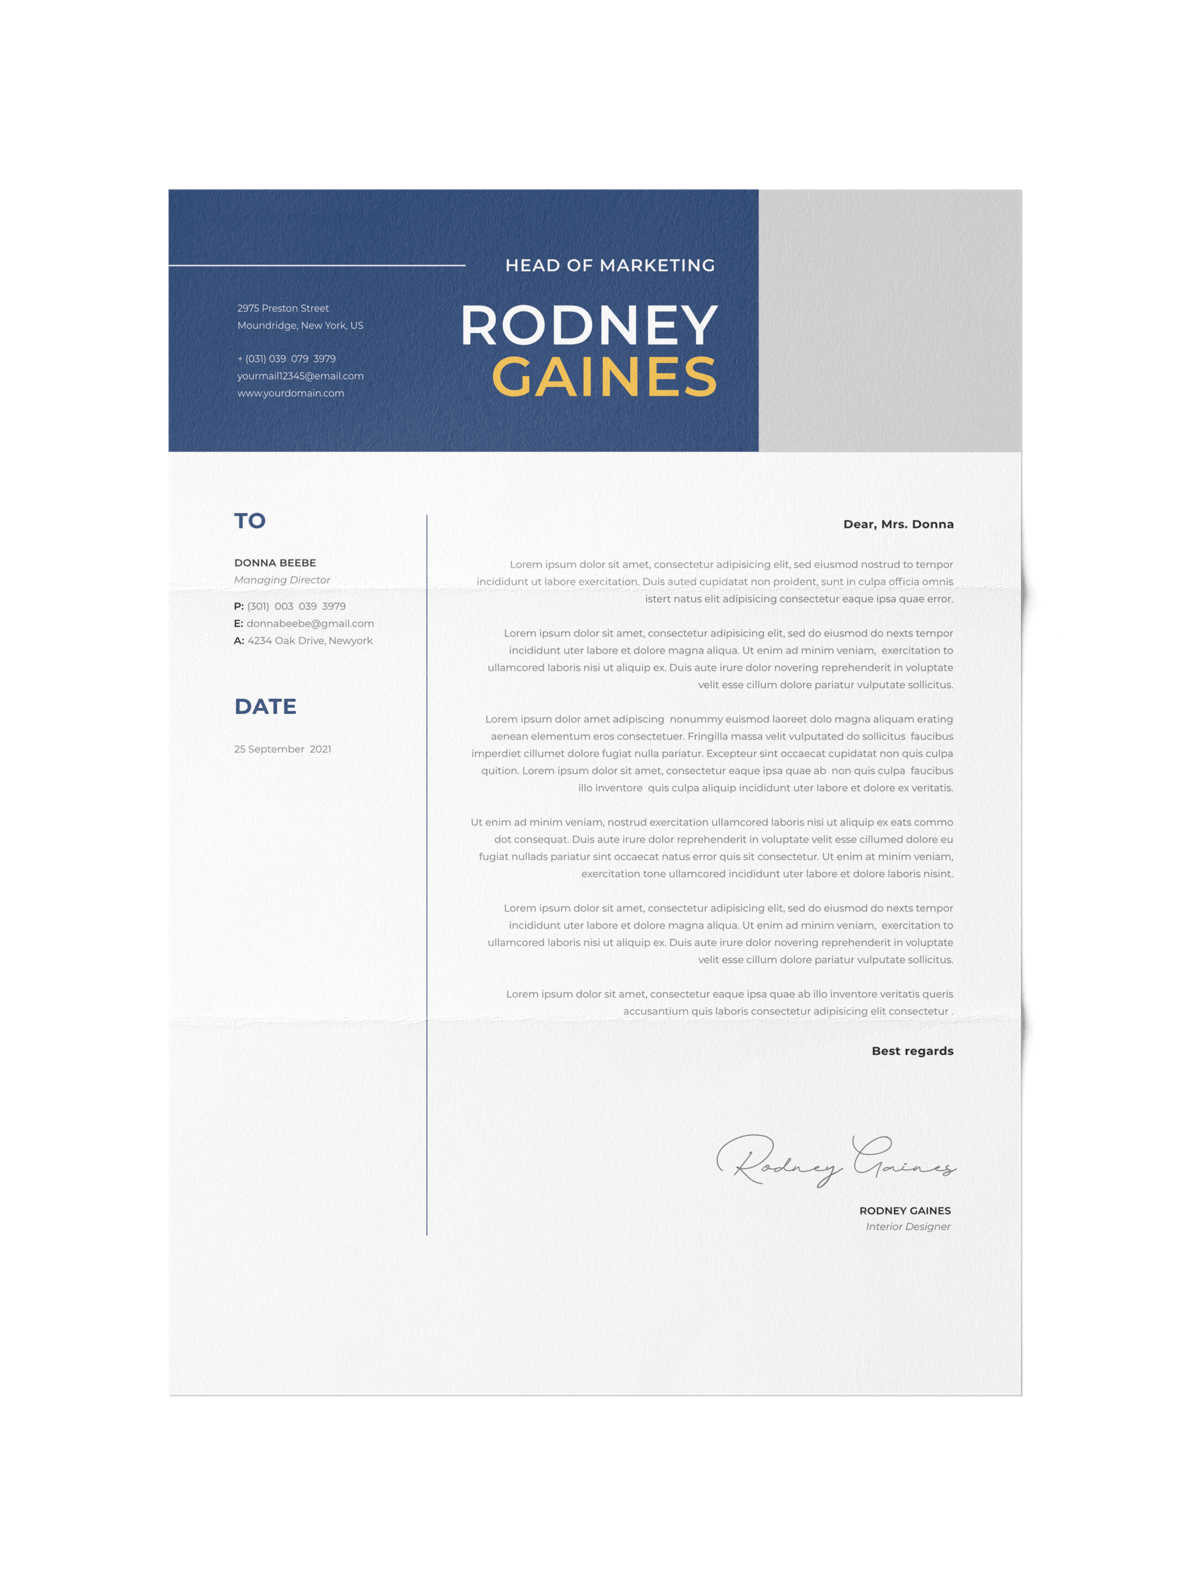 CV #102 Rodney Gaines